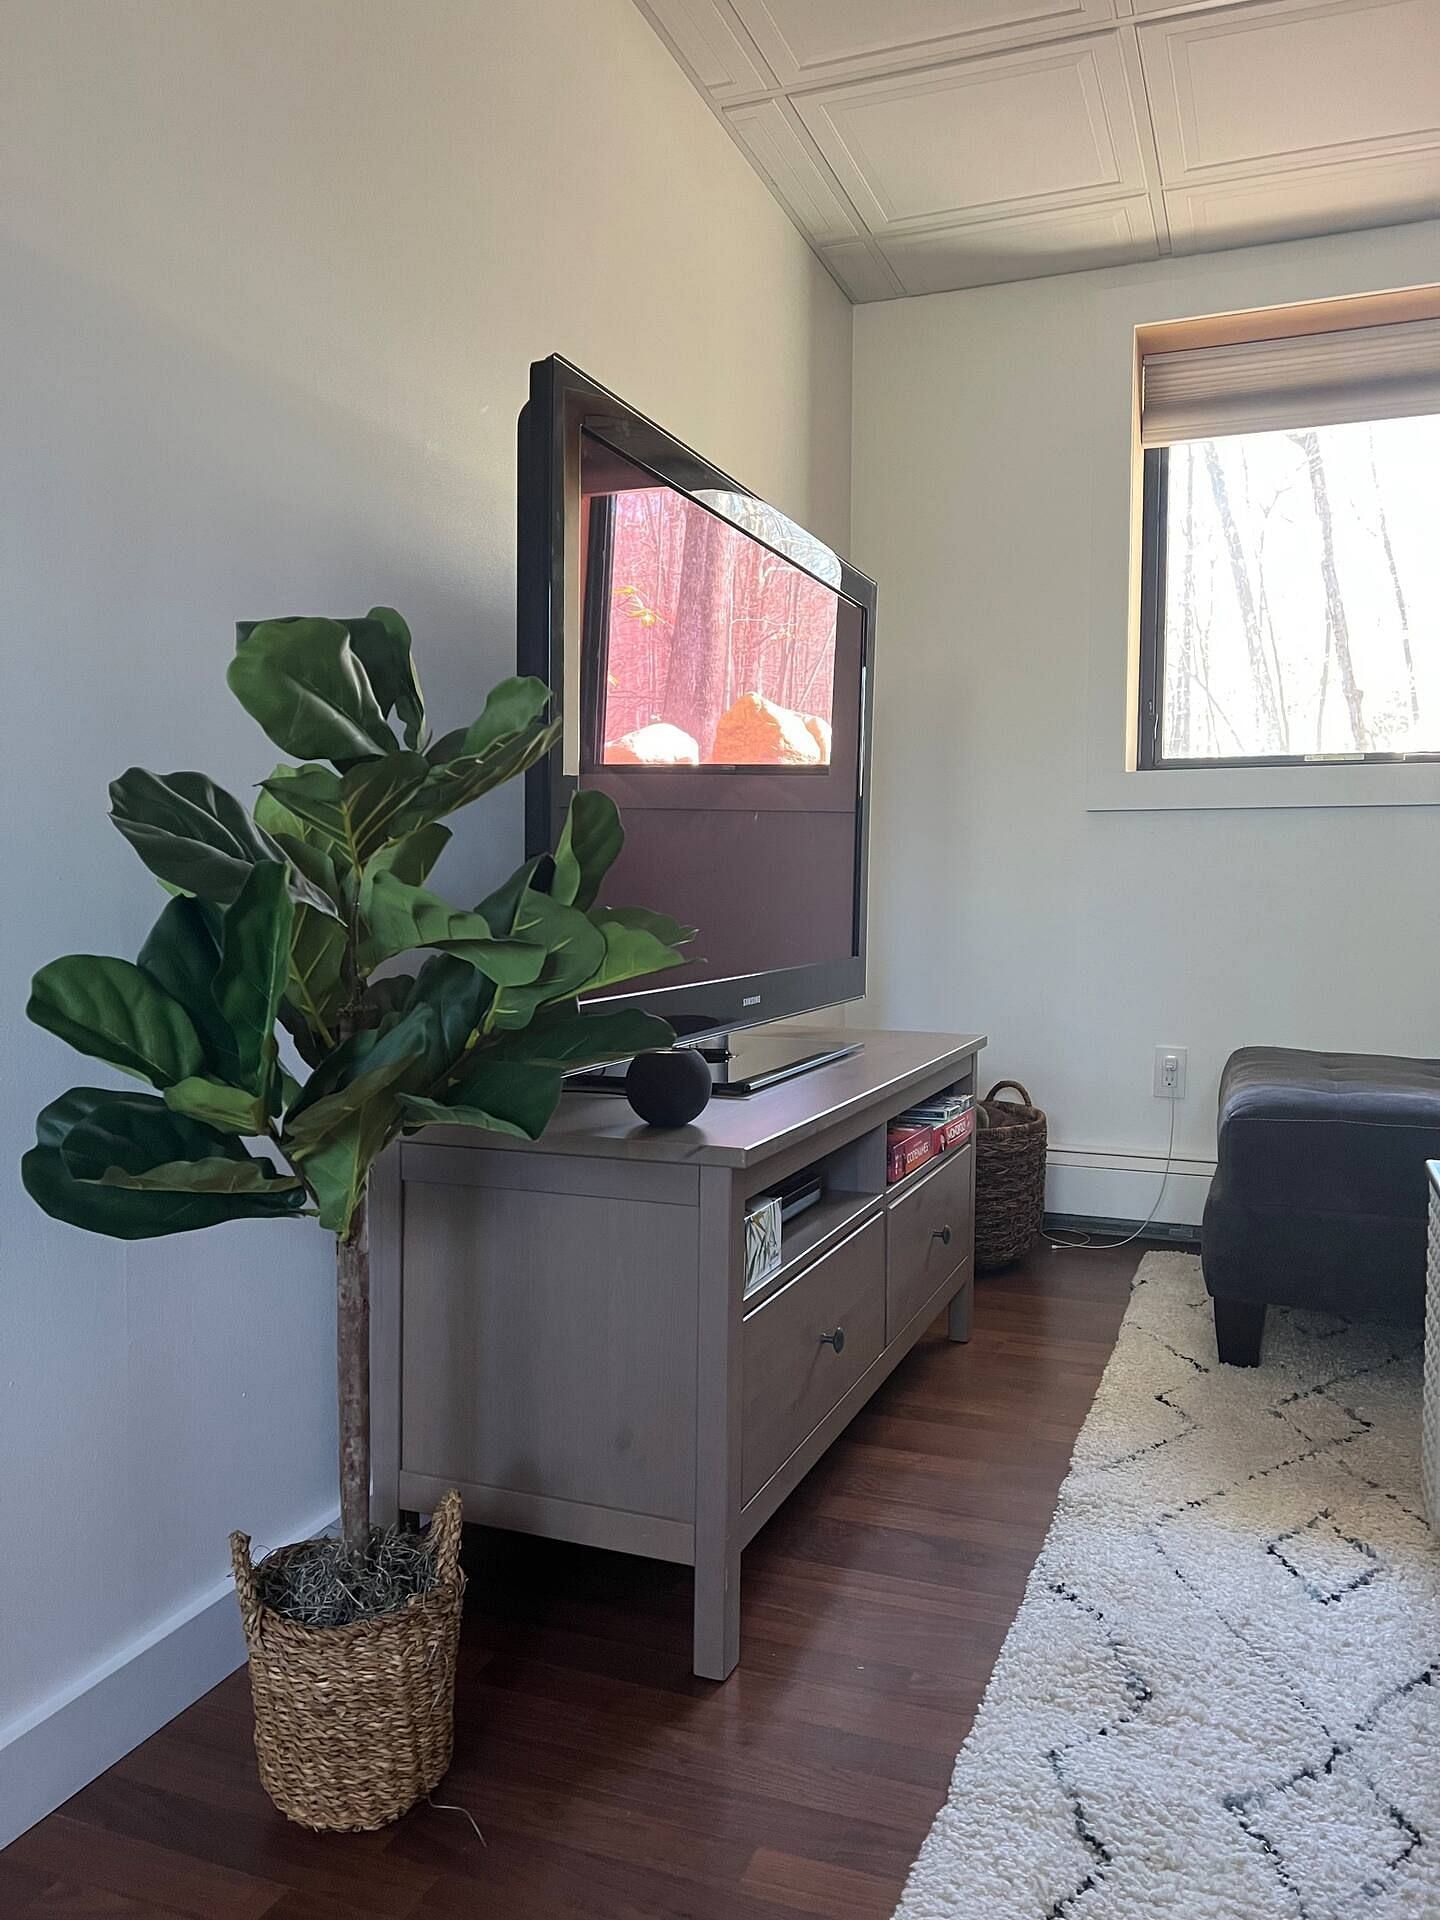 JWguest Apartment at Gardiner, New York | Halcyon Home | Jwbnb no brobnb 2